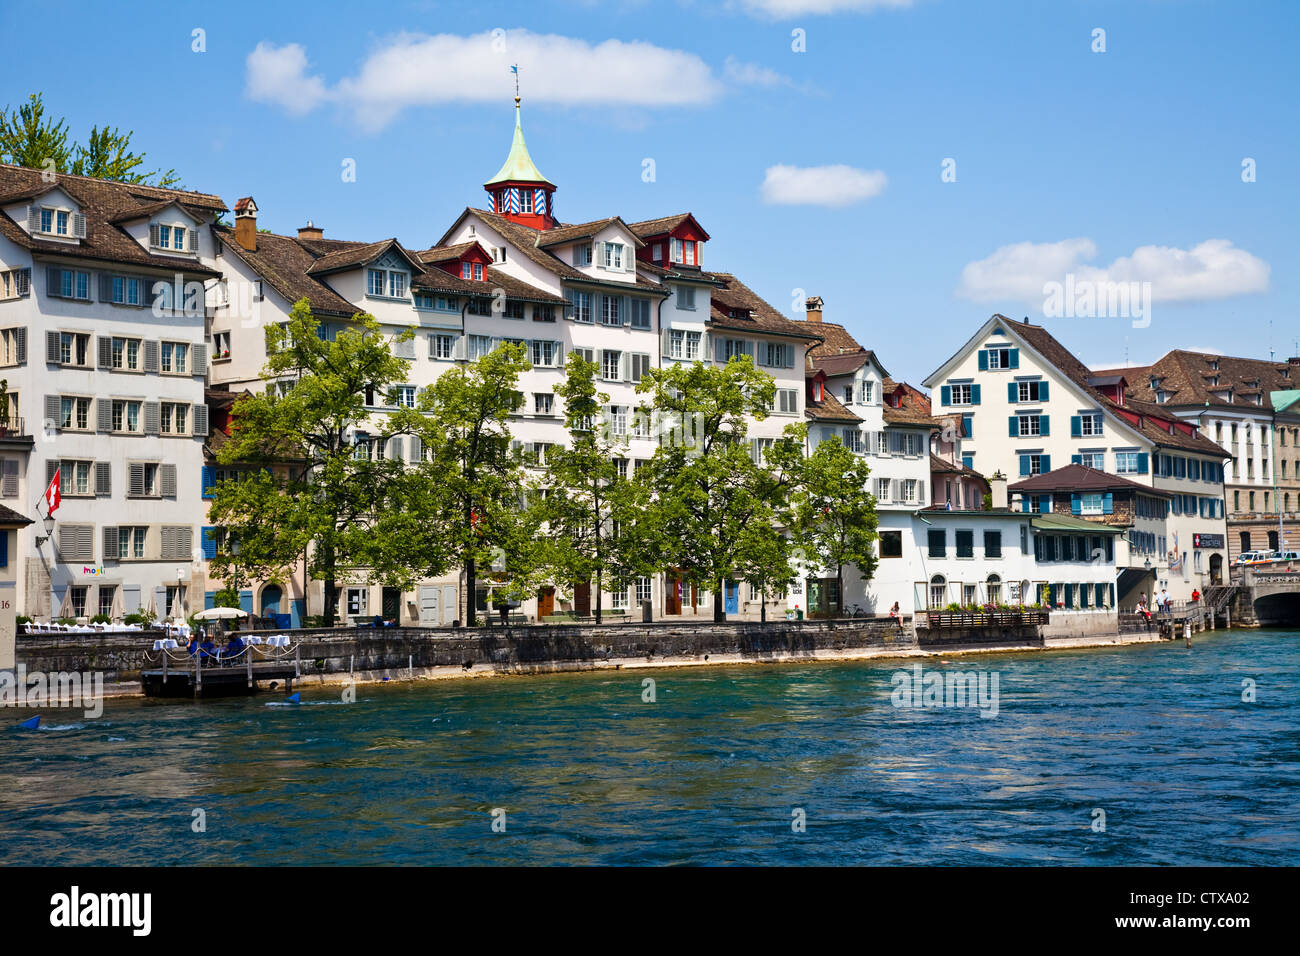 A scene across the River Limmat in Zurich, Switzerland Stock Photo